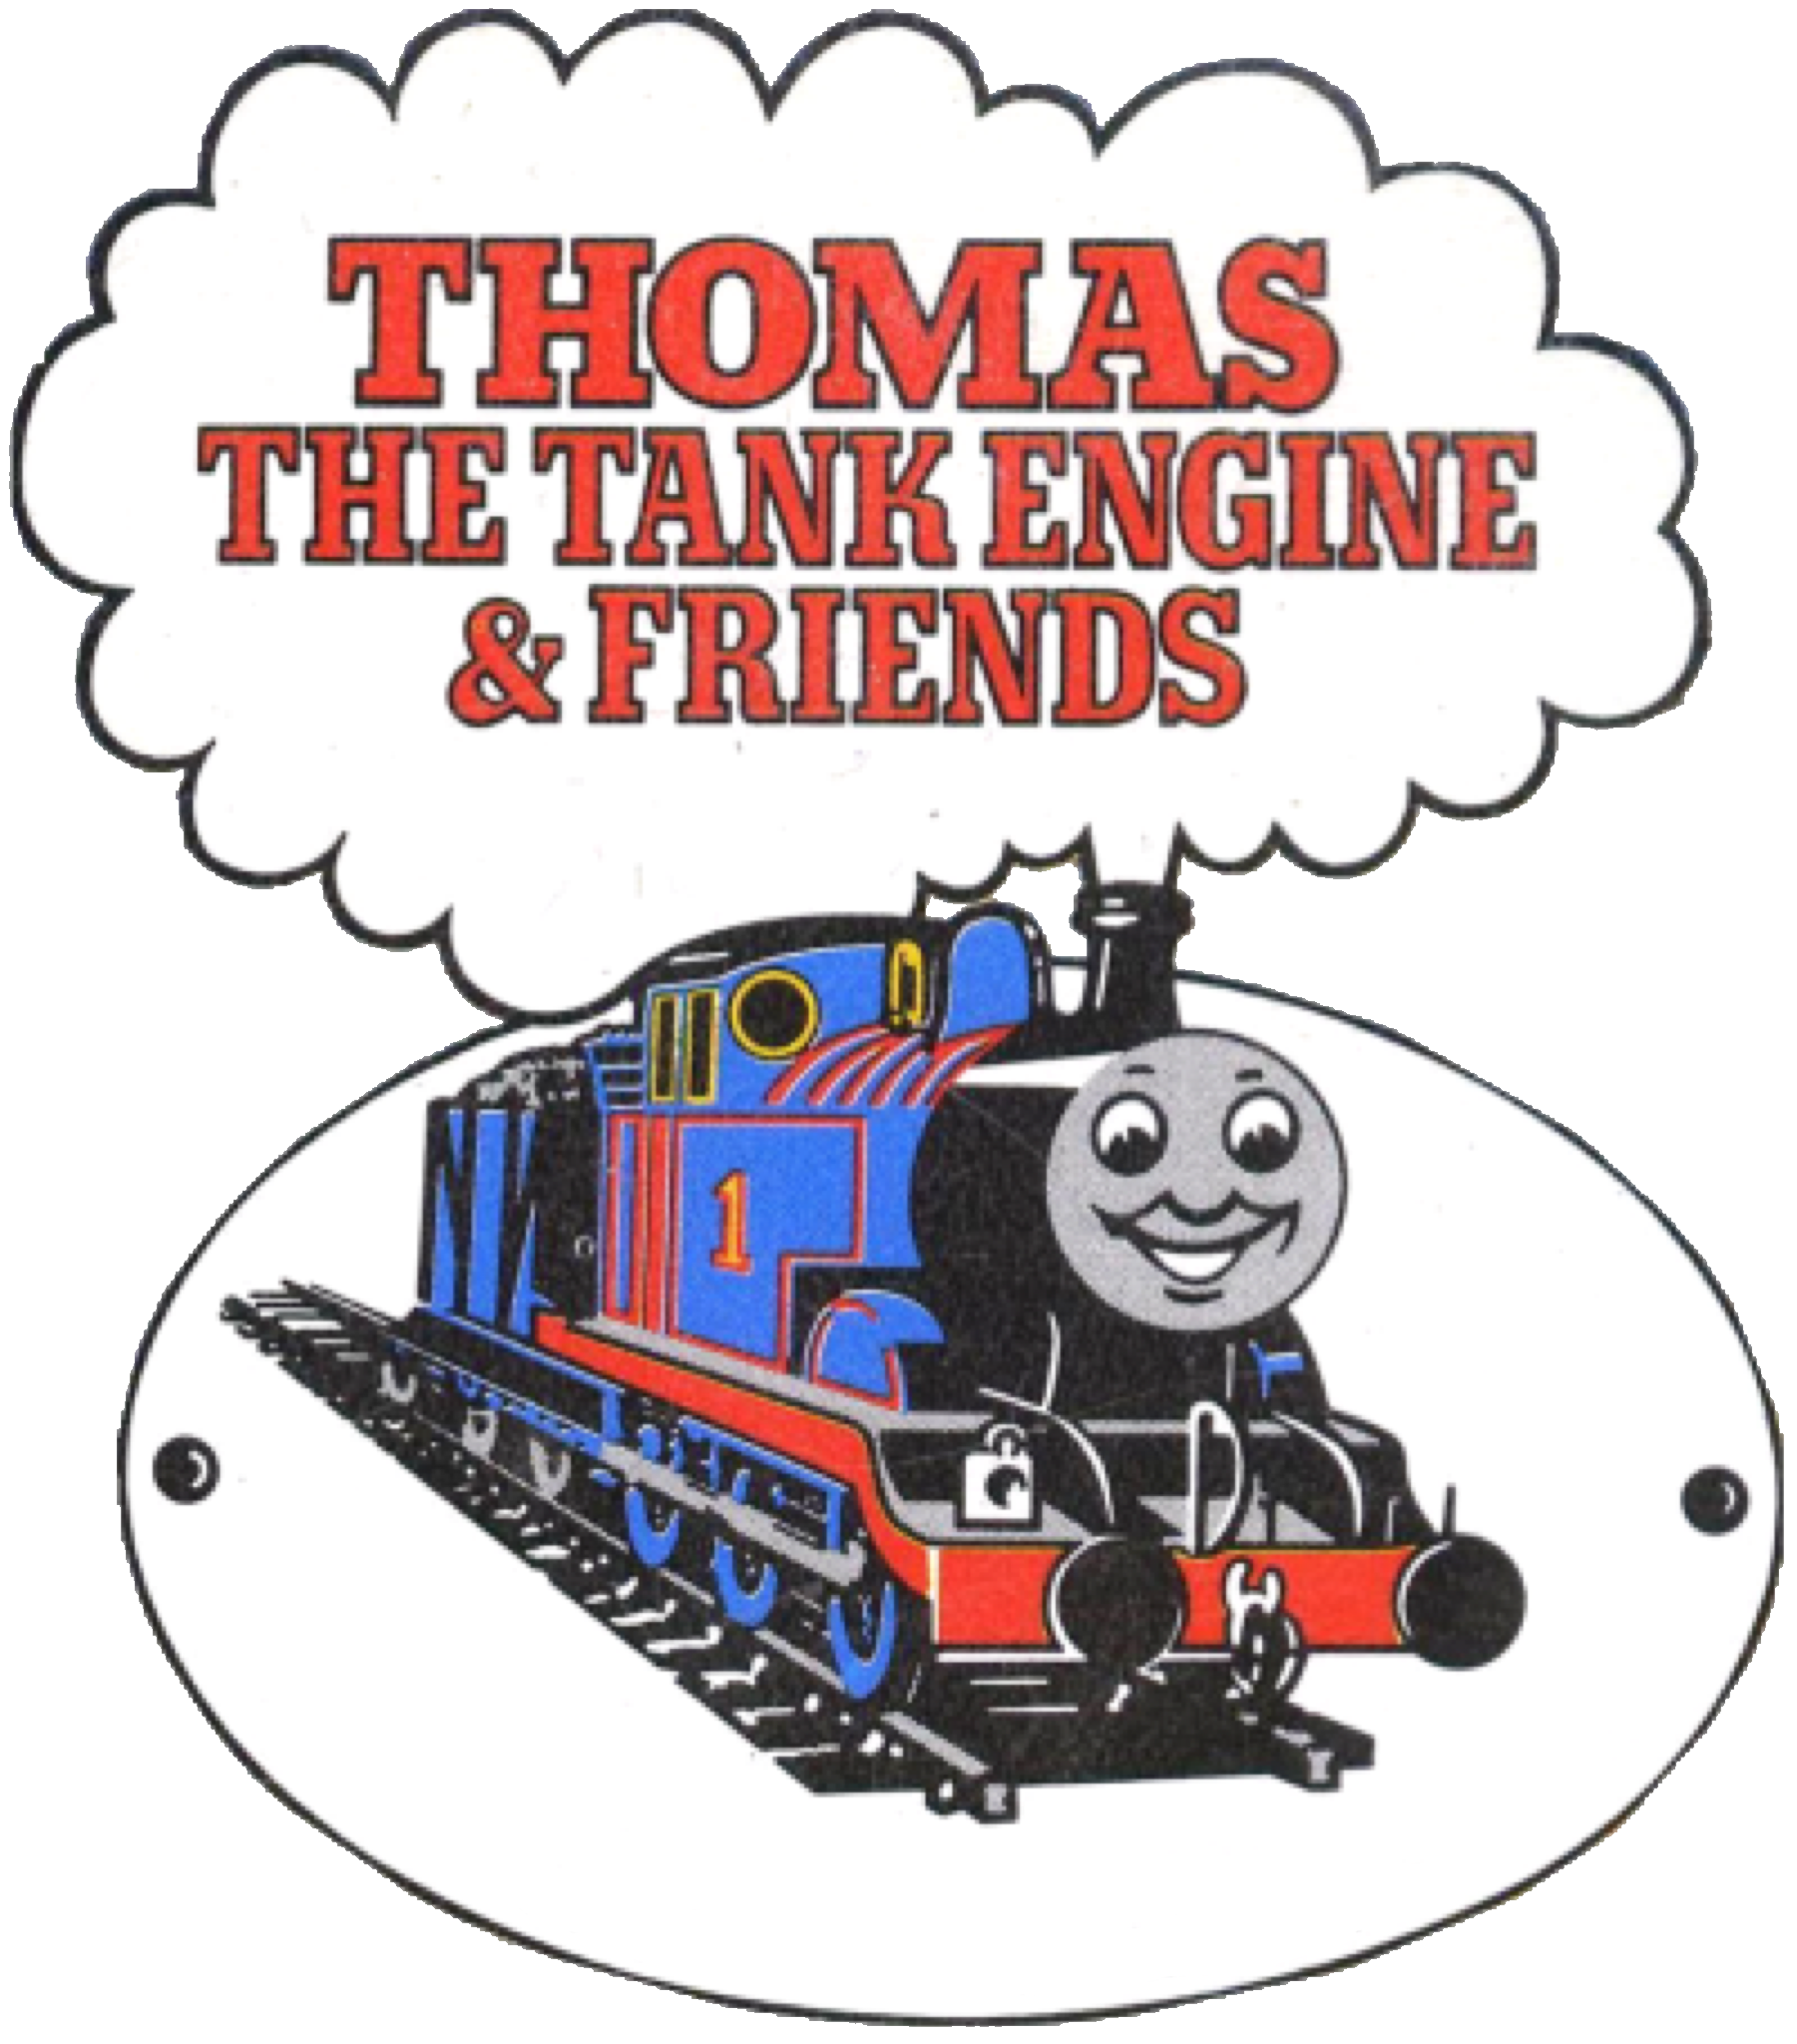 Thomas Friends Logo Variations Logopedia Fandom